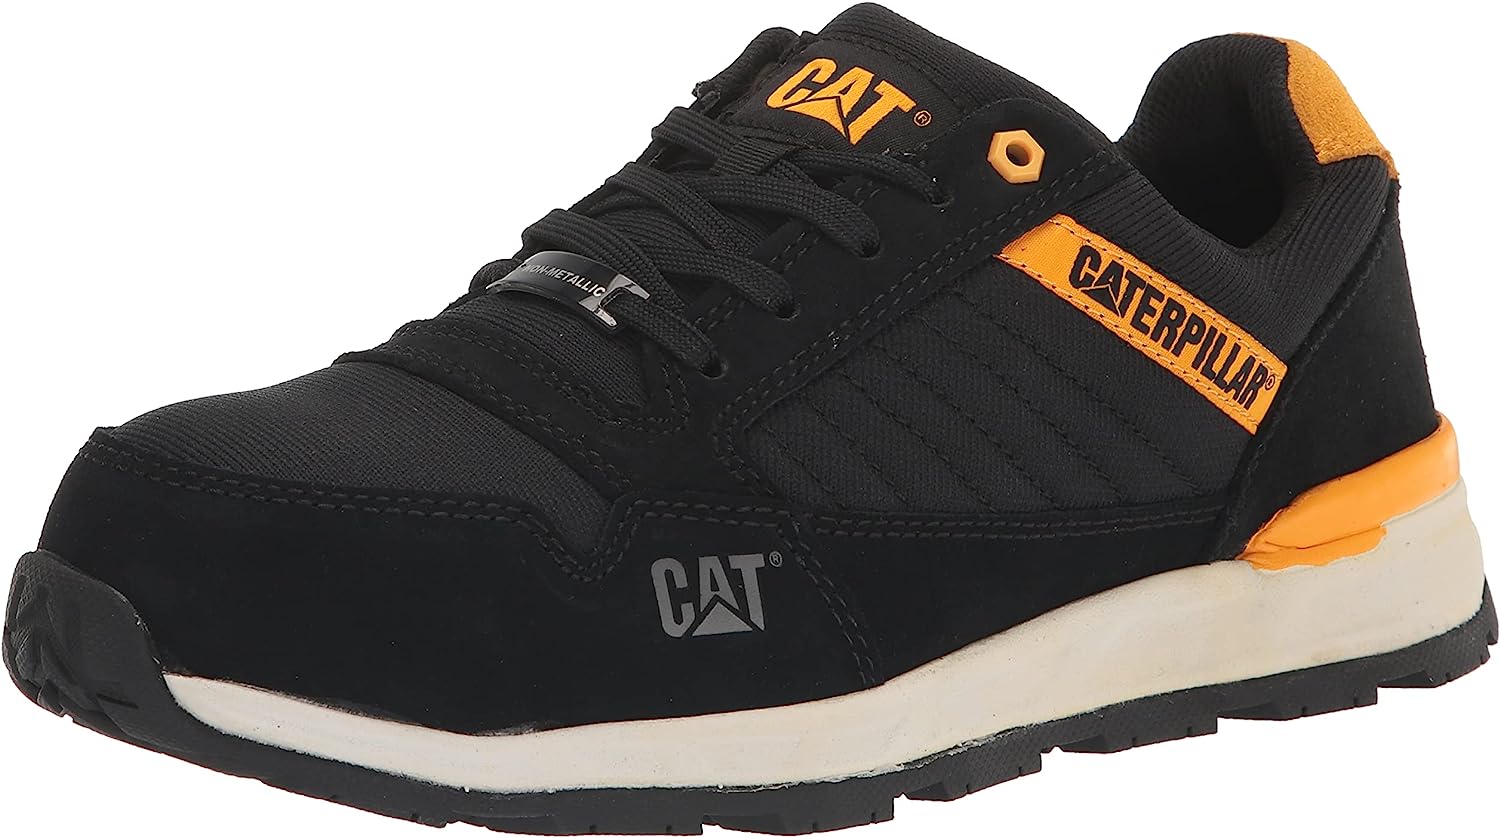 Cat Footwear Men's Venward Composite Toe Industrial Shoe